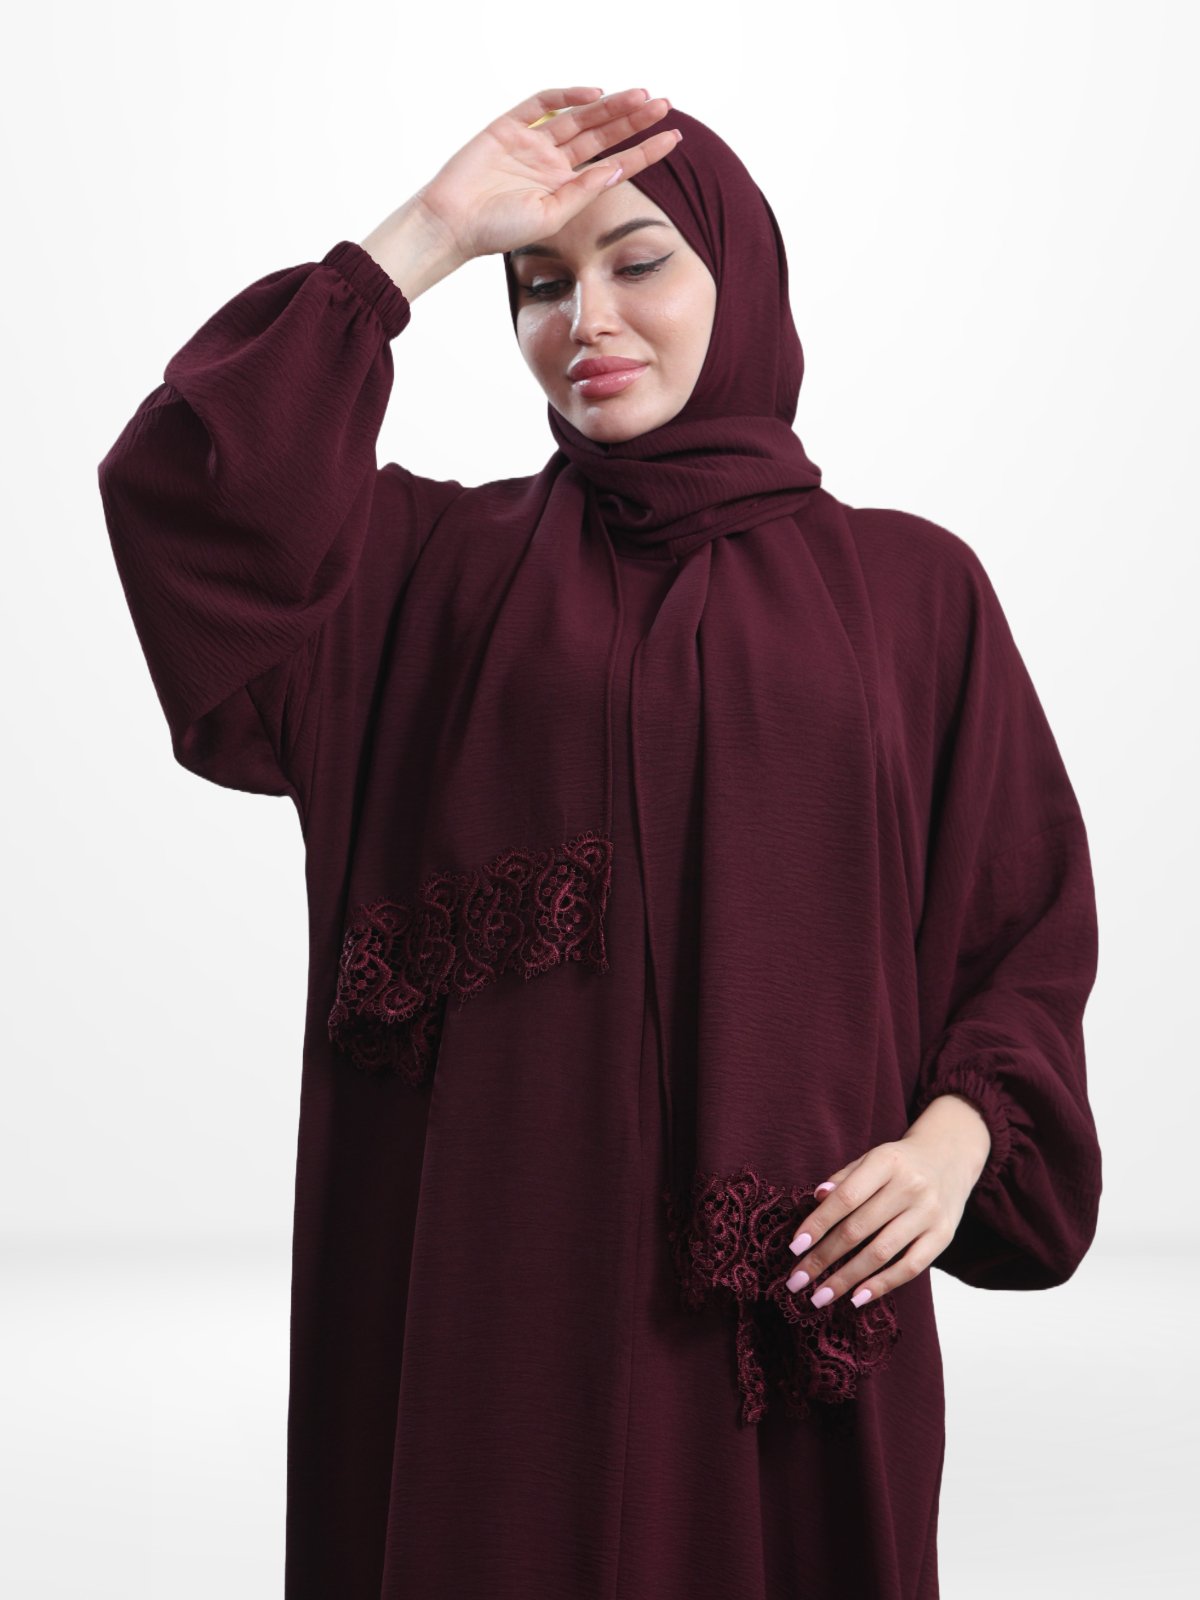 One - Piece Prayer Dress & Abaya with attached Hijab - Plain (Standard Size - Slim Fit) - Modest Essence